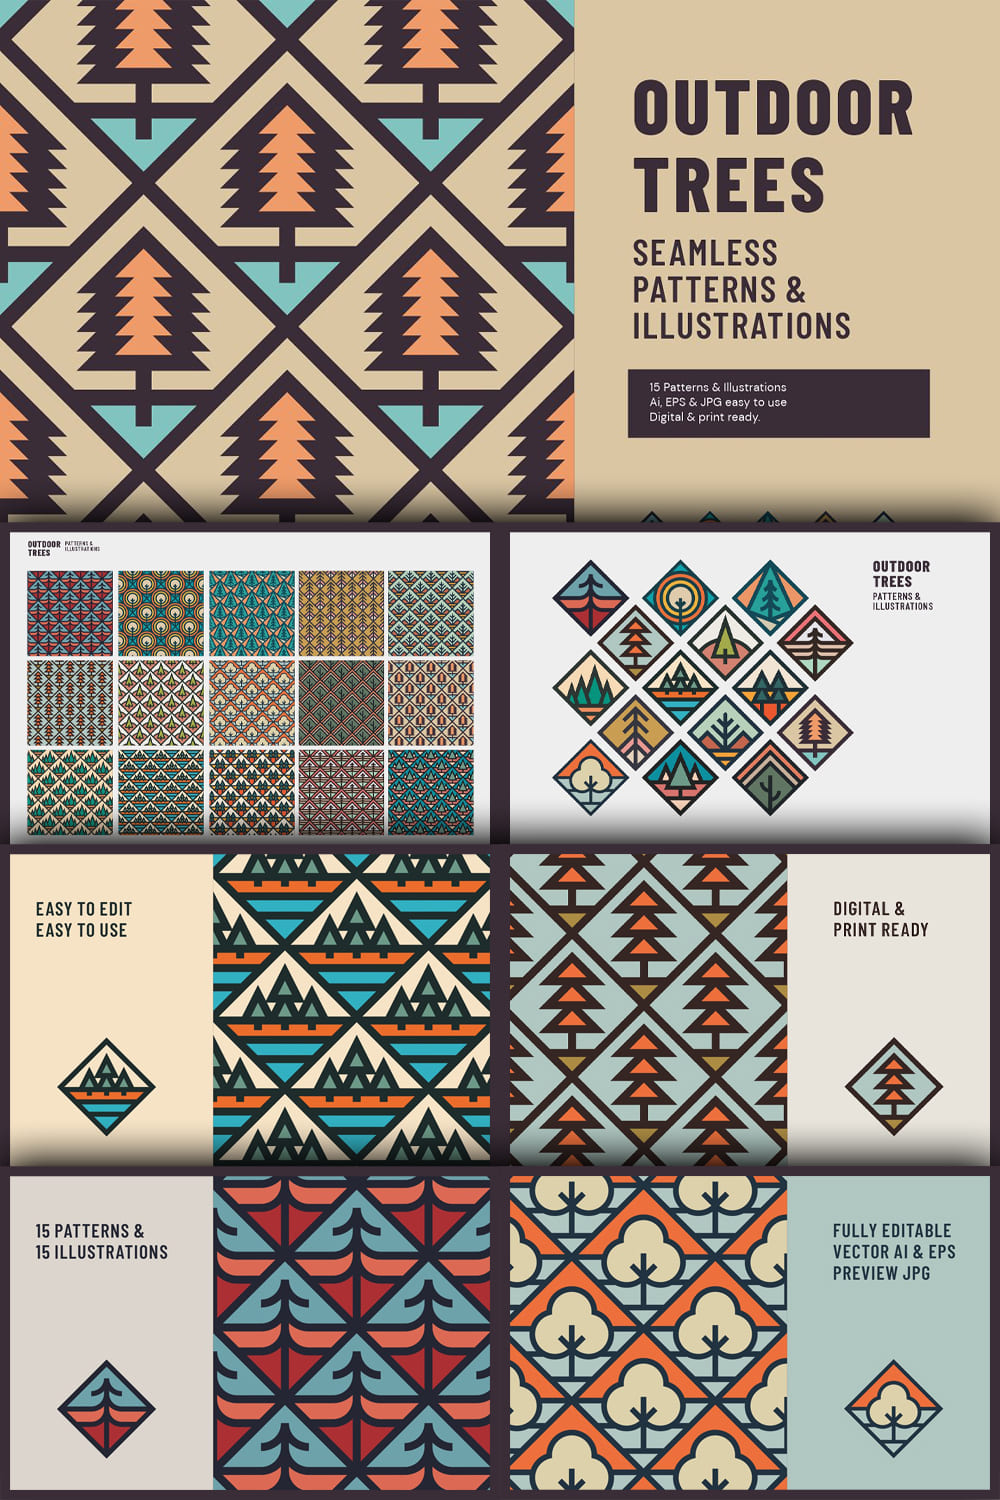 Outdoor Trees Patterns & Illustrations - Pinterest.